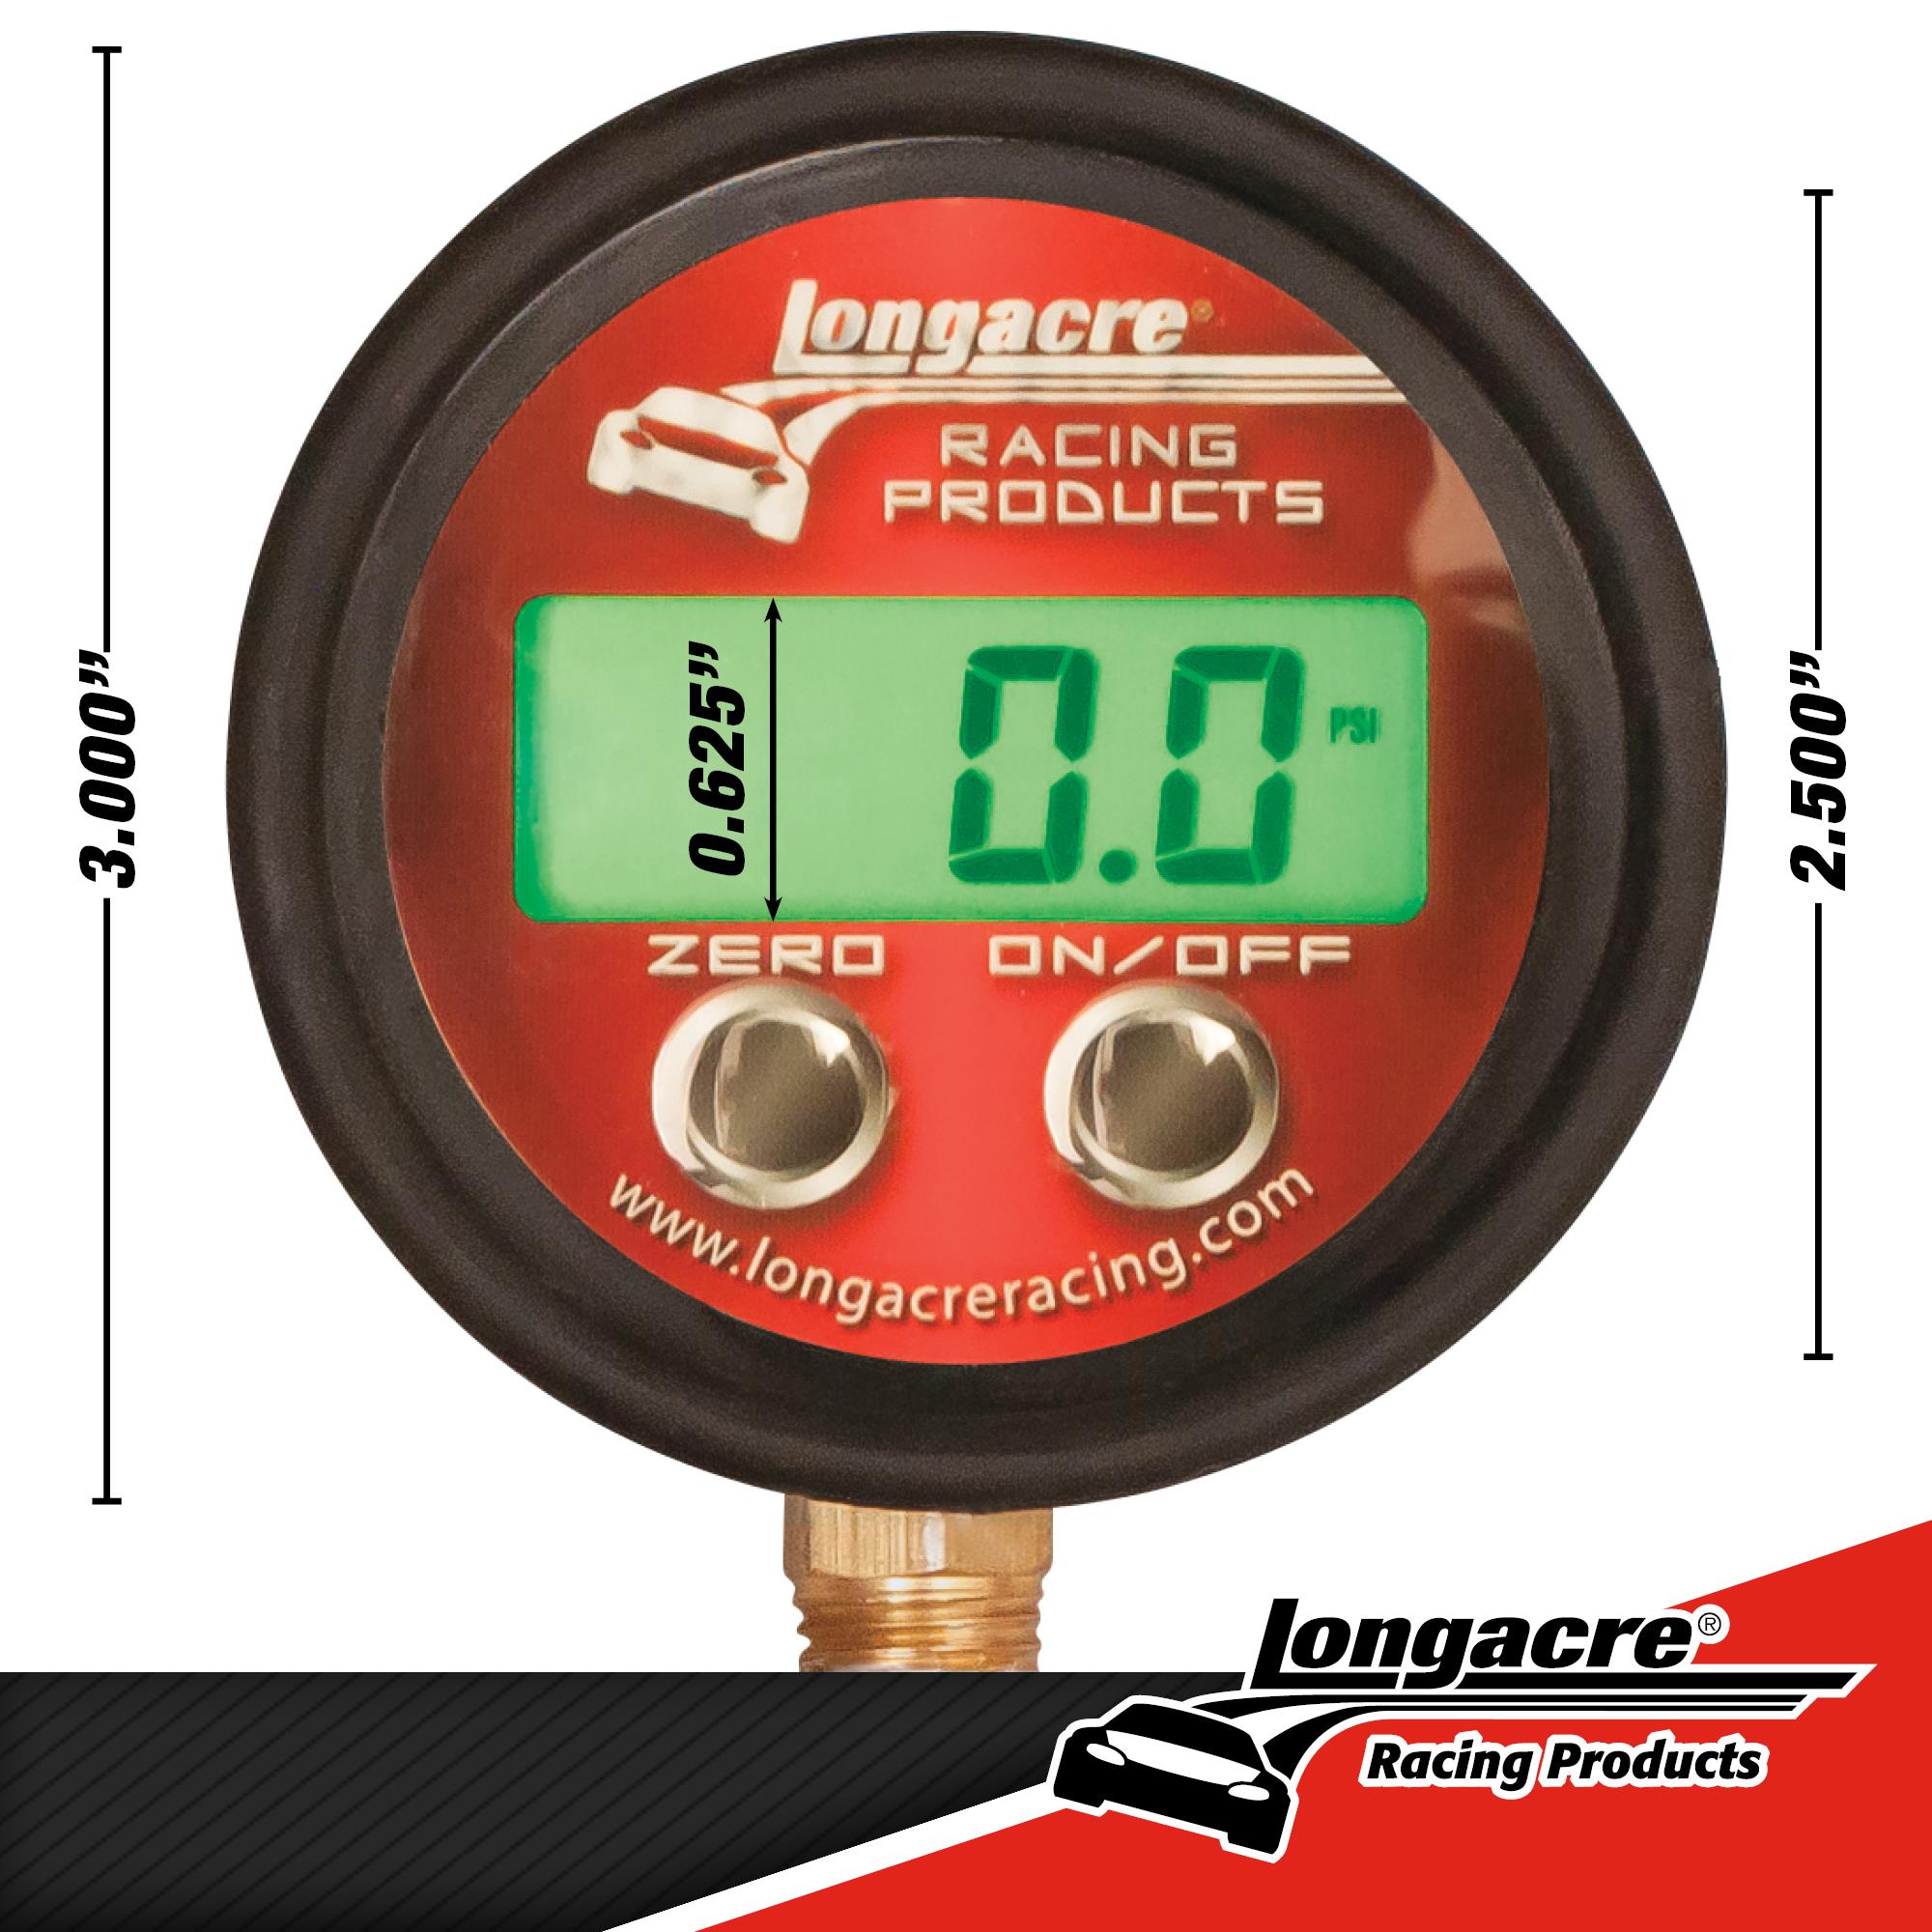 Digital Quick Fill Tire Pressure Gauge 0-60 psi